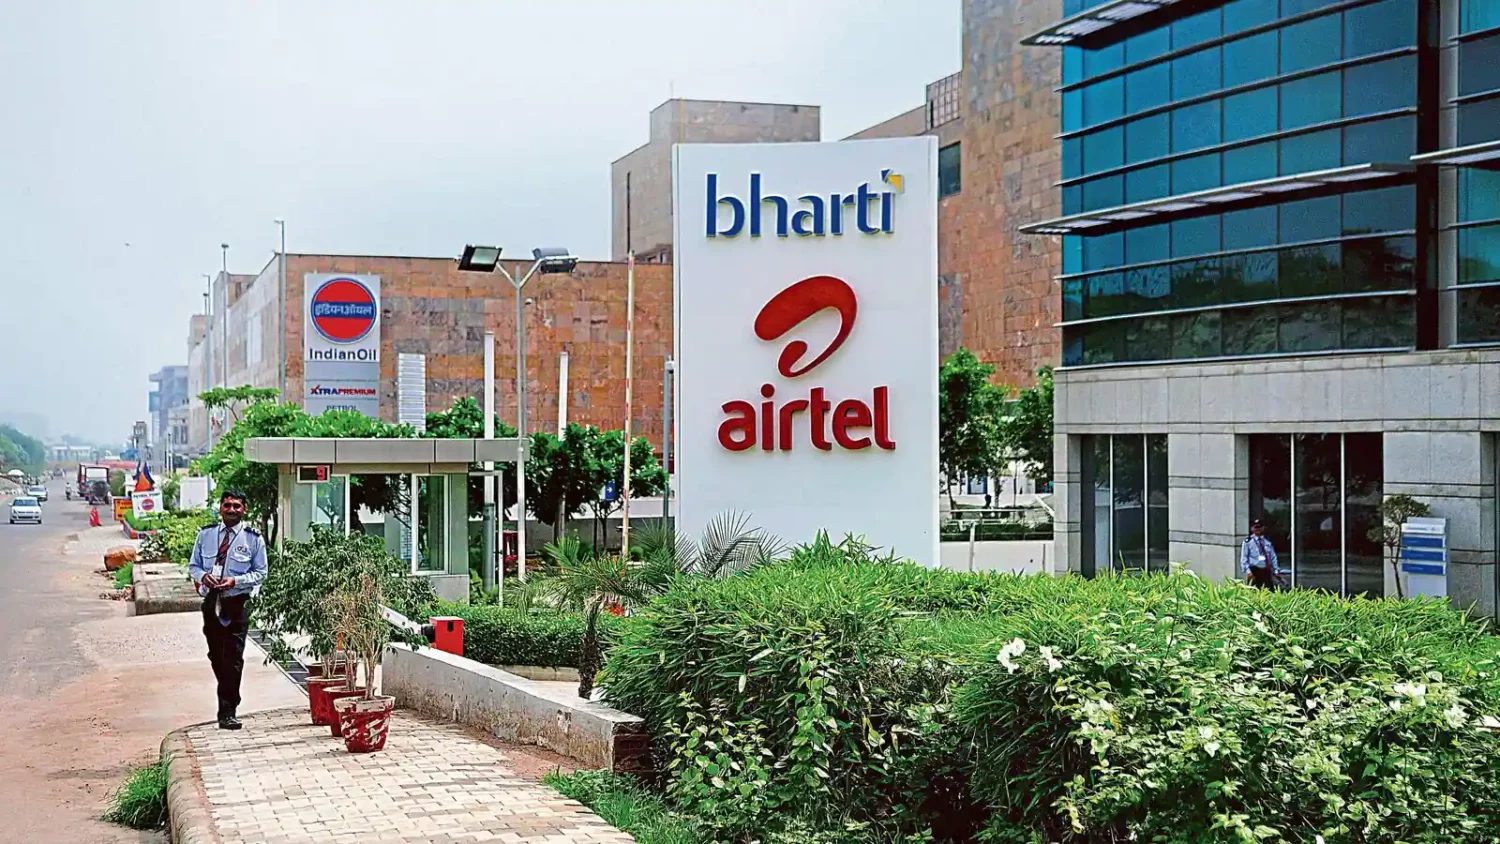 Google: Θα επενδύσει 1 δις δολάρια στην ινδική εταιρεία κινητής Bharti Airte